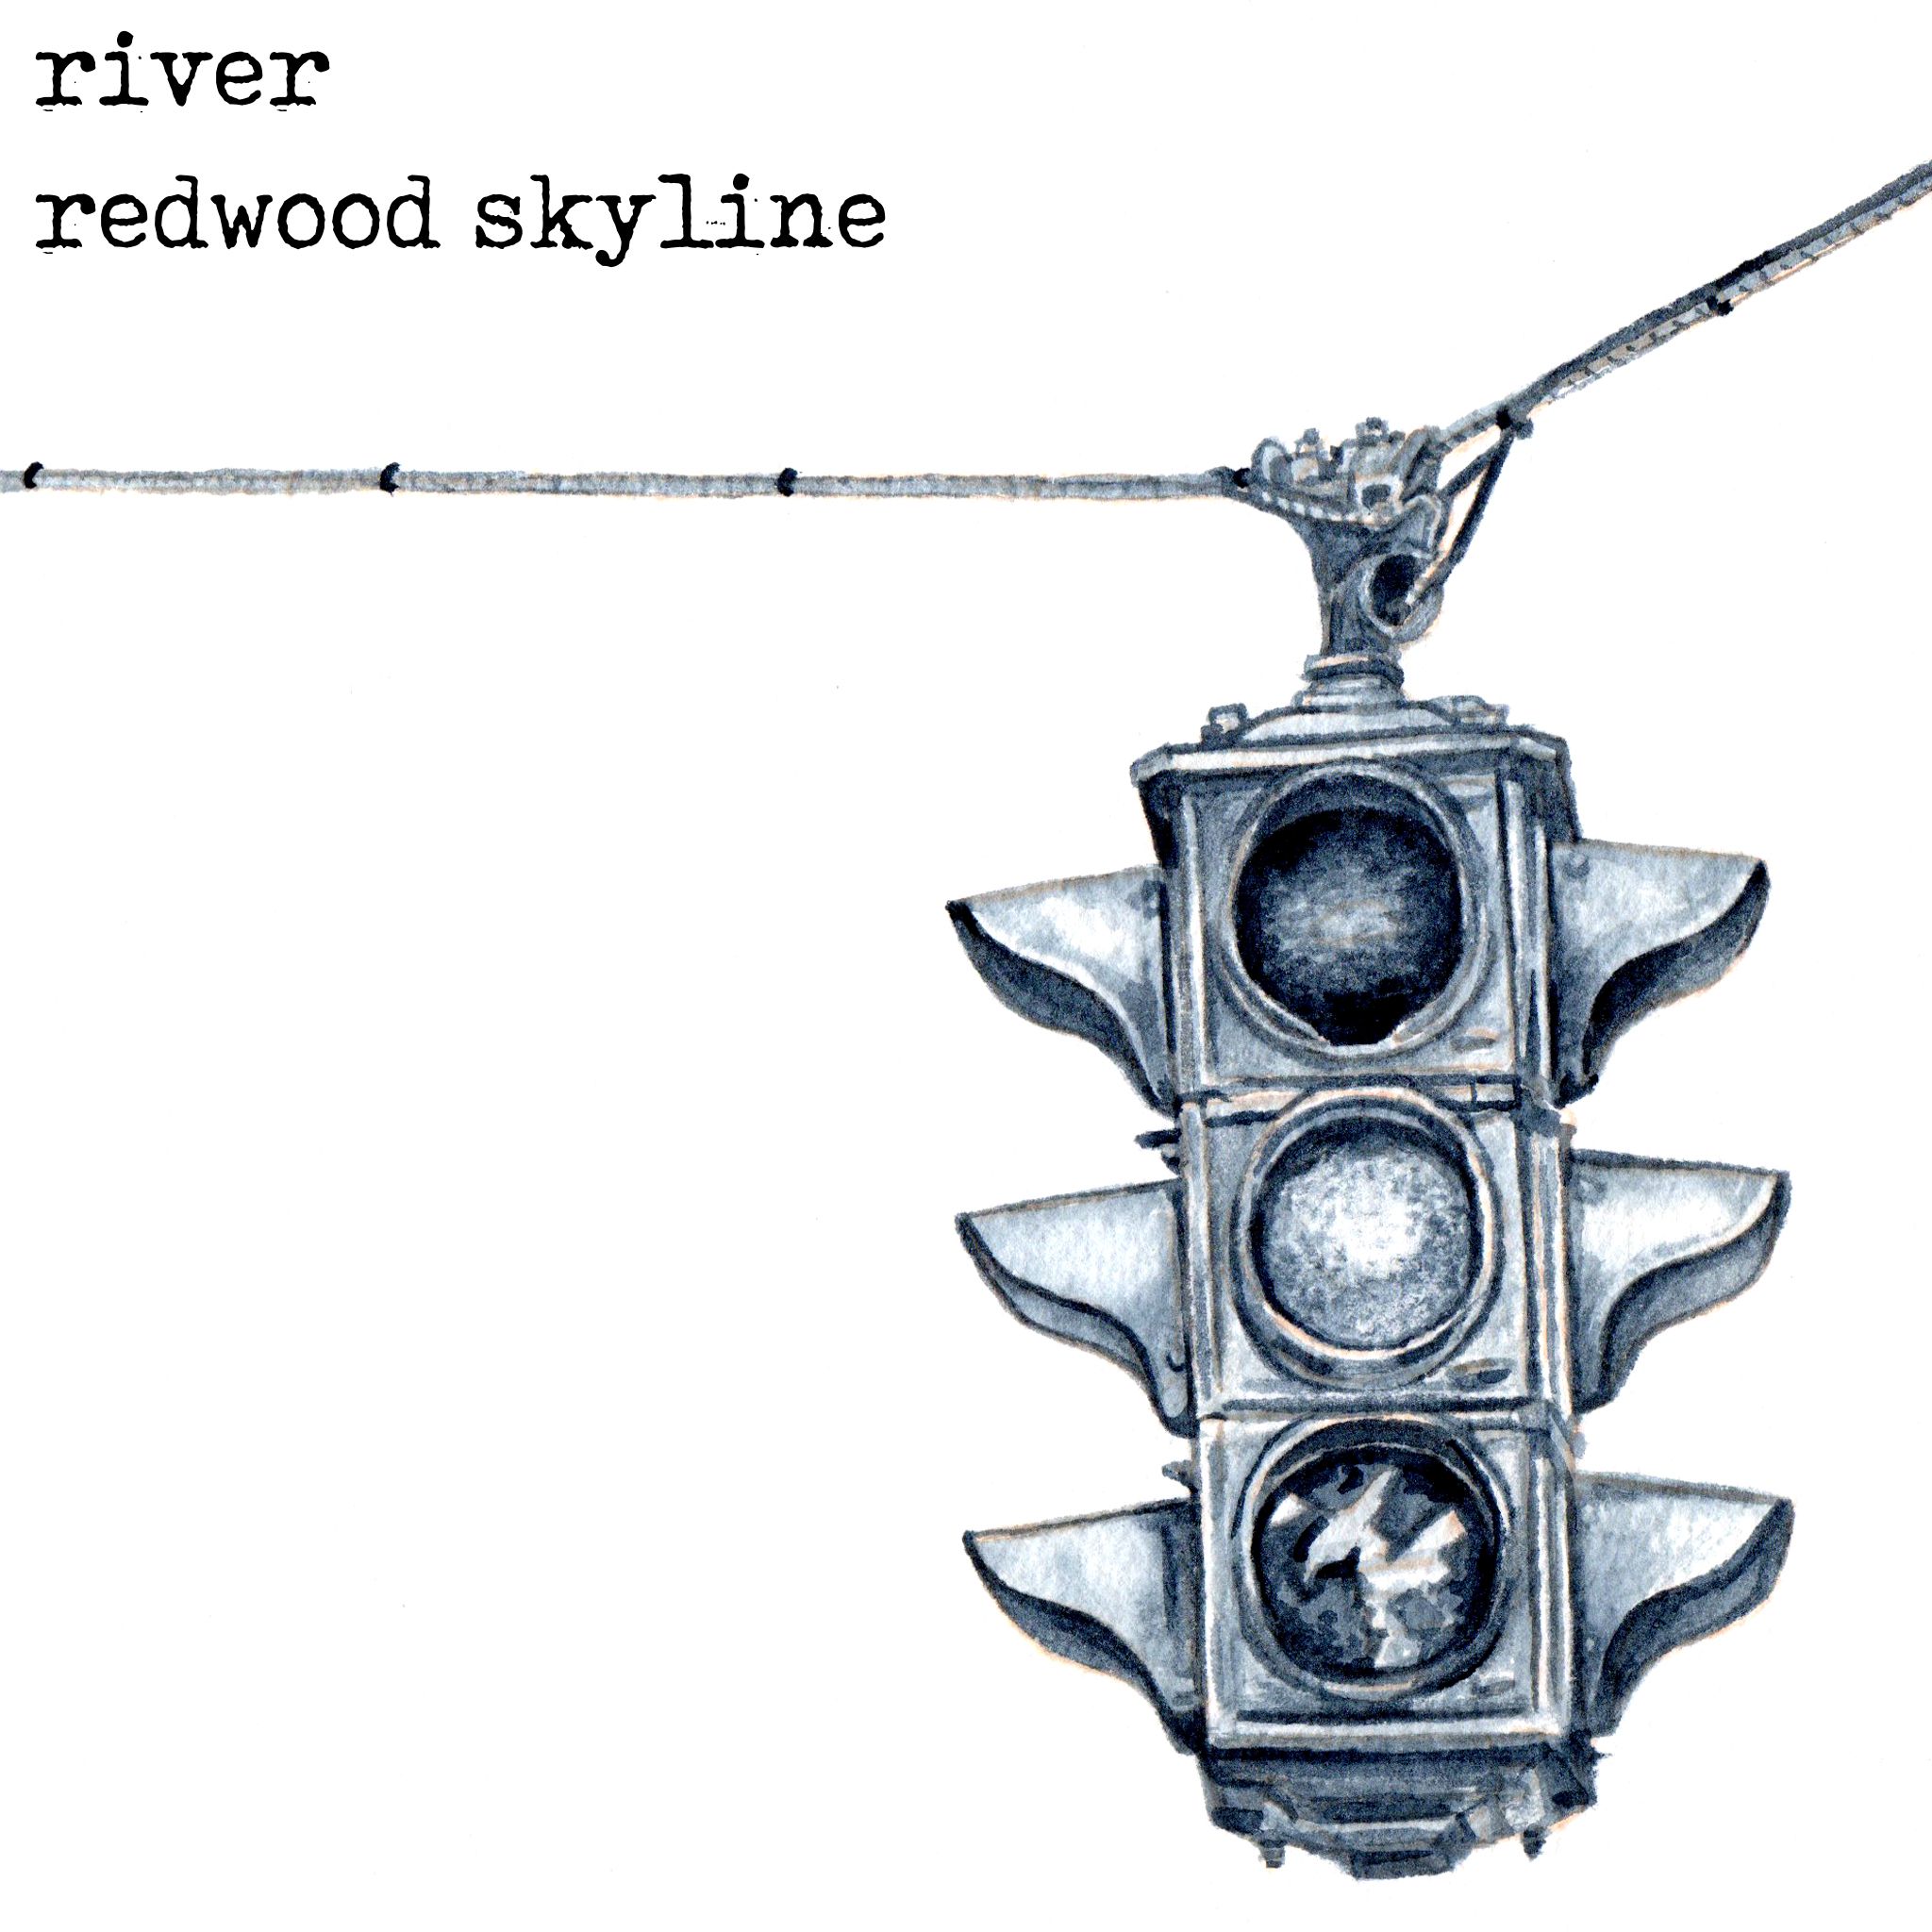 Redwood Skyline – “The River”